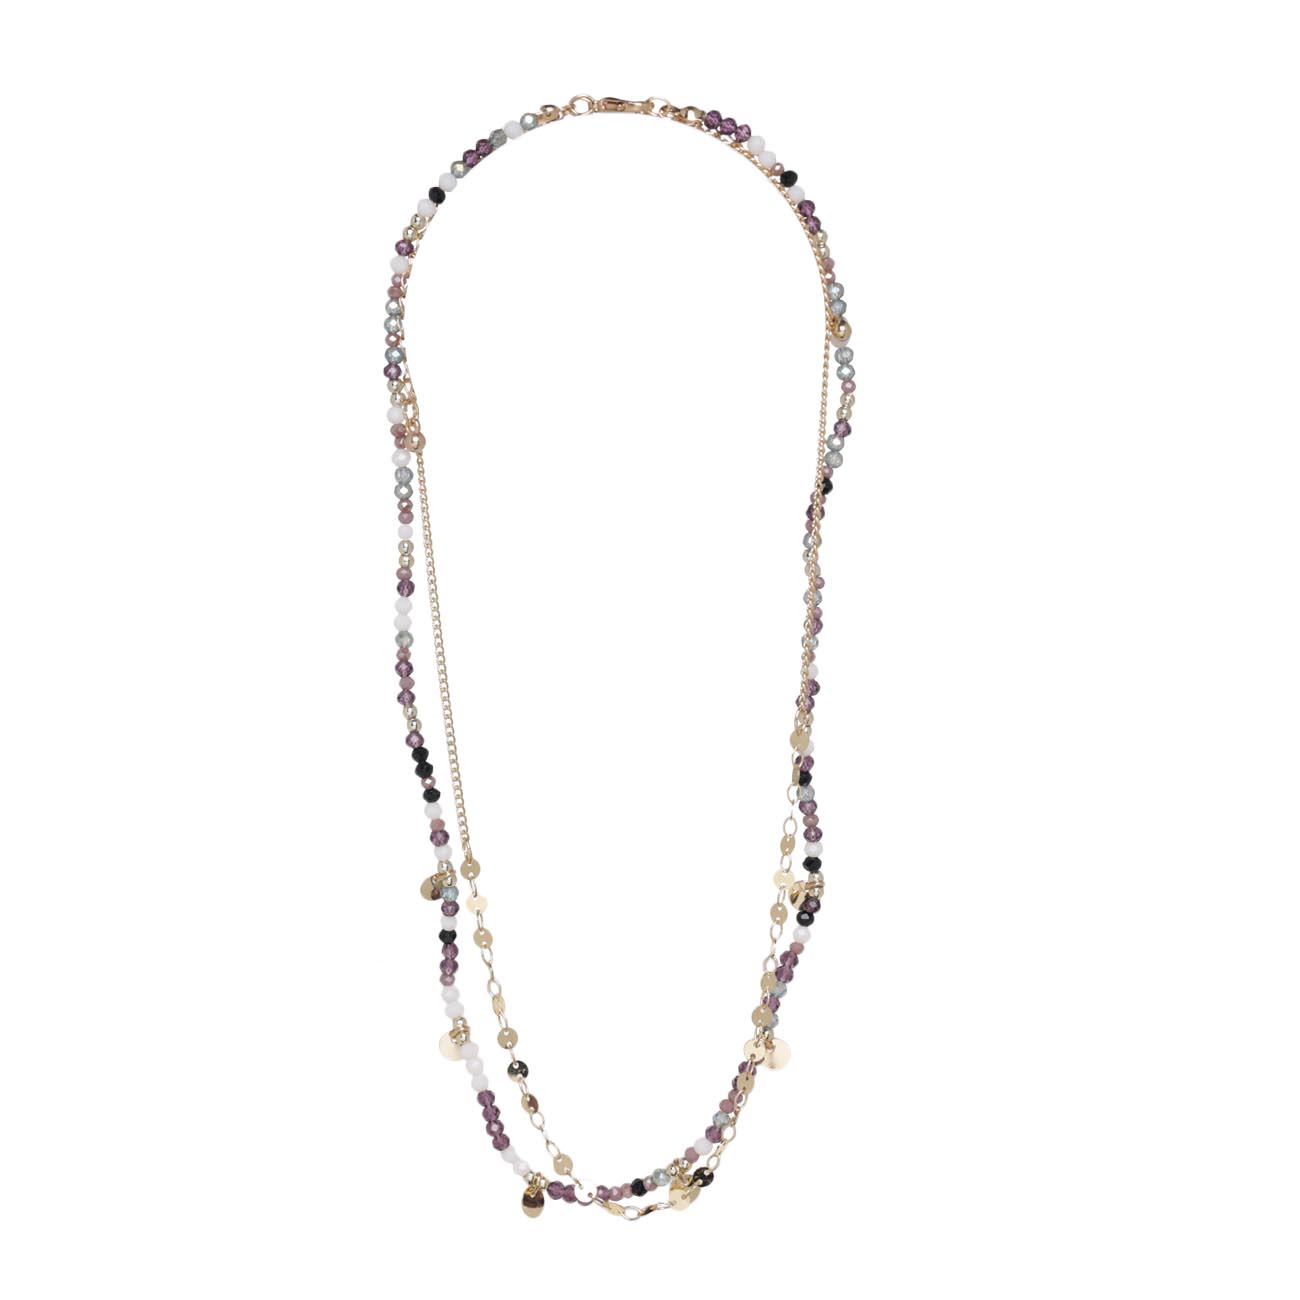 Chain, 22/25 cm, 2 pieces, metal / plastic, gold, Colored stones, Mineral изображение № 2